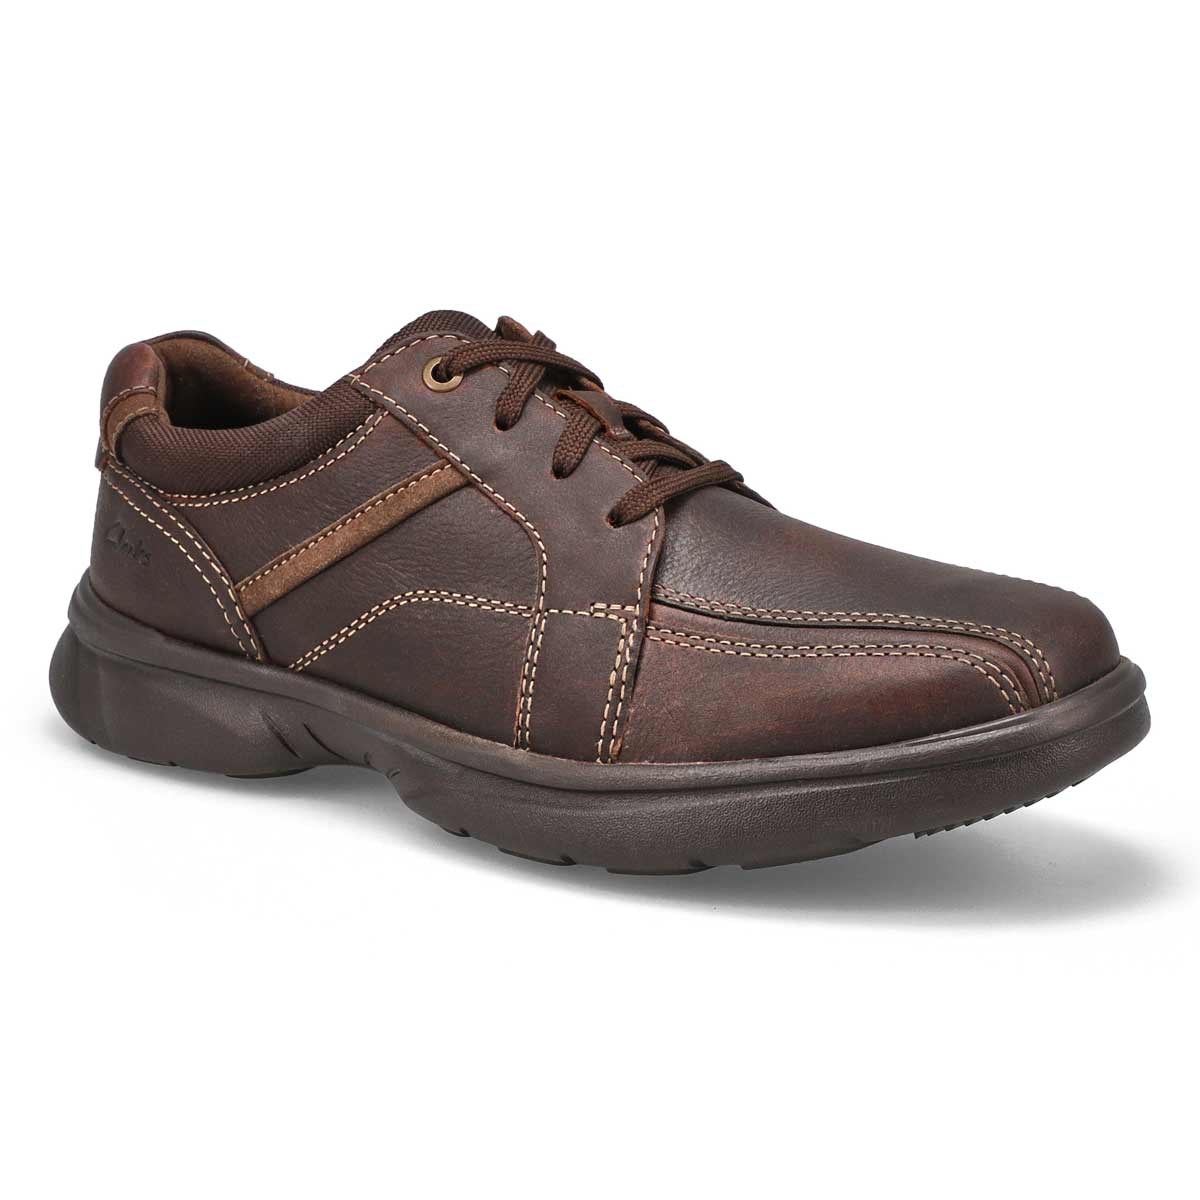 Clarks Men's Bradley Walk Lace Up Casual Shoe | SoftMoc.com